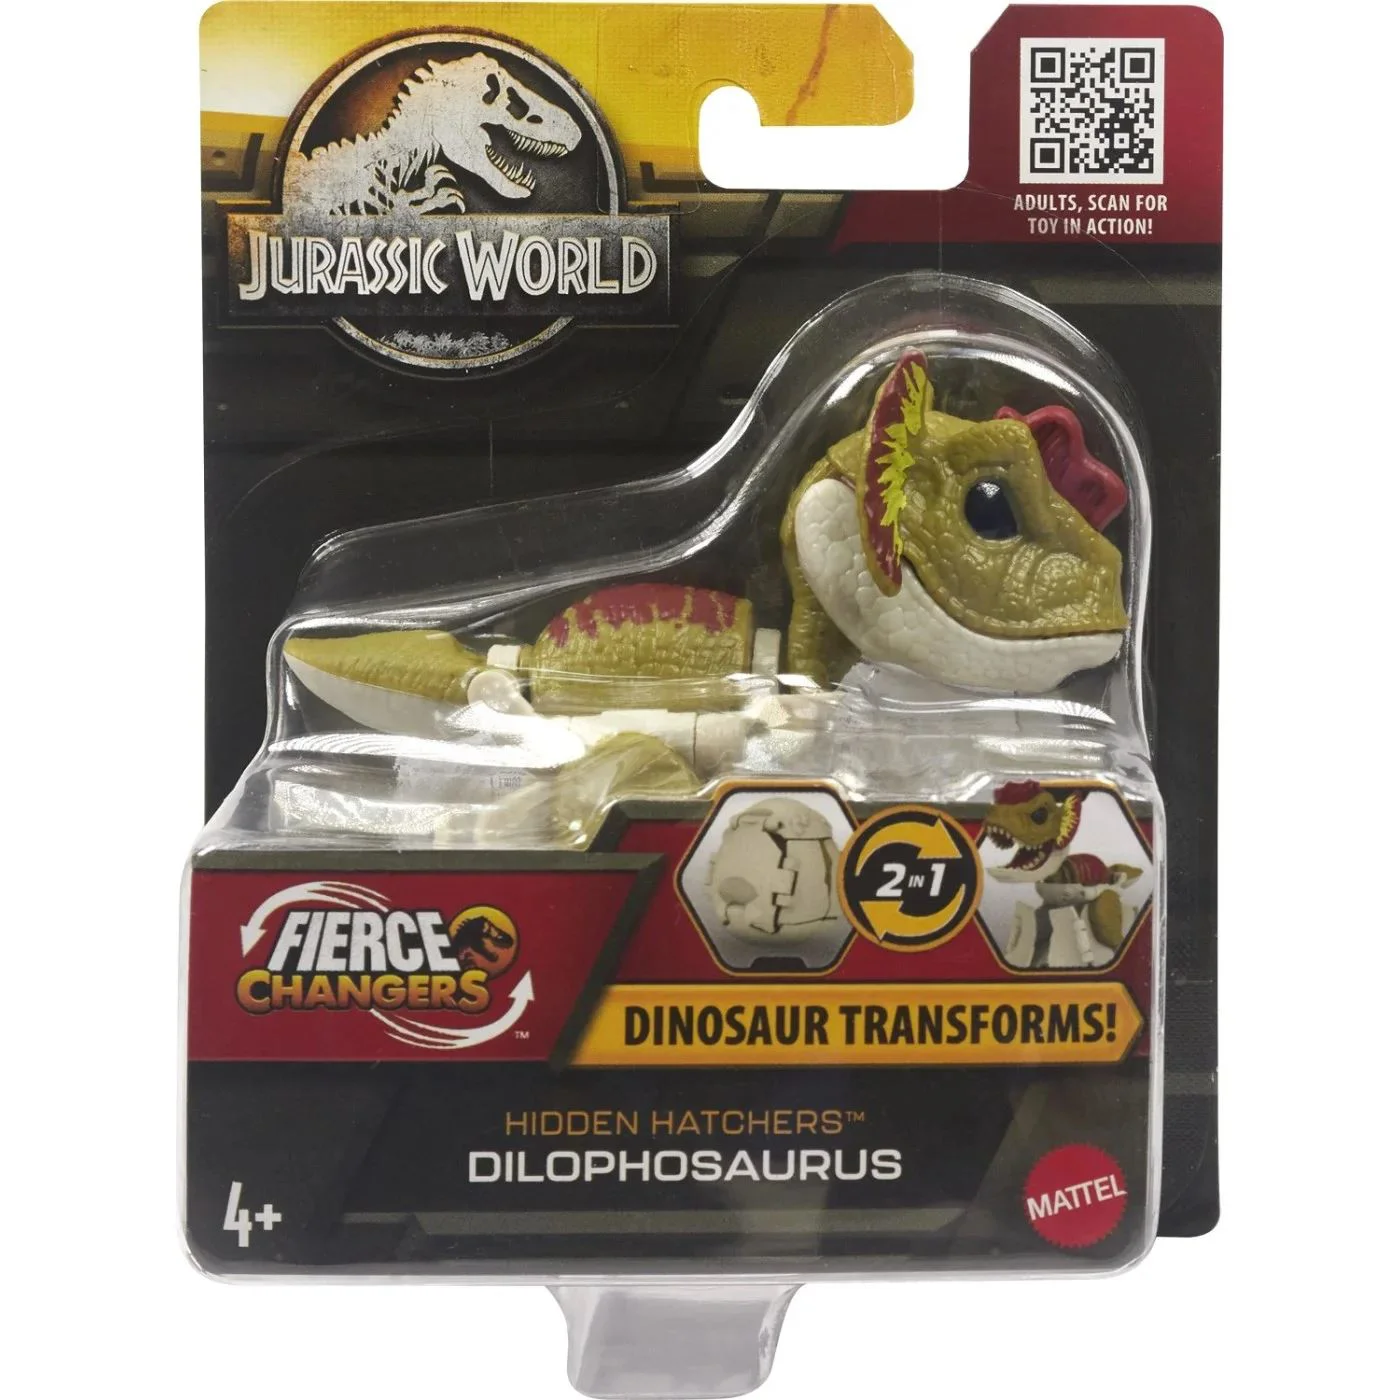 Dinozauri-transformers Jurassic World